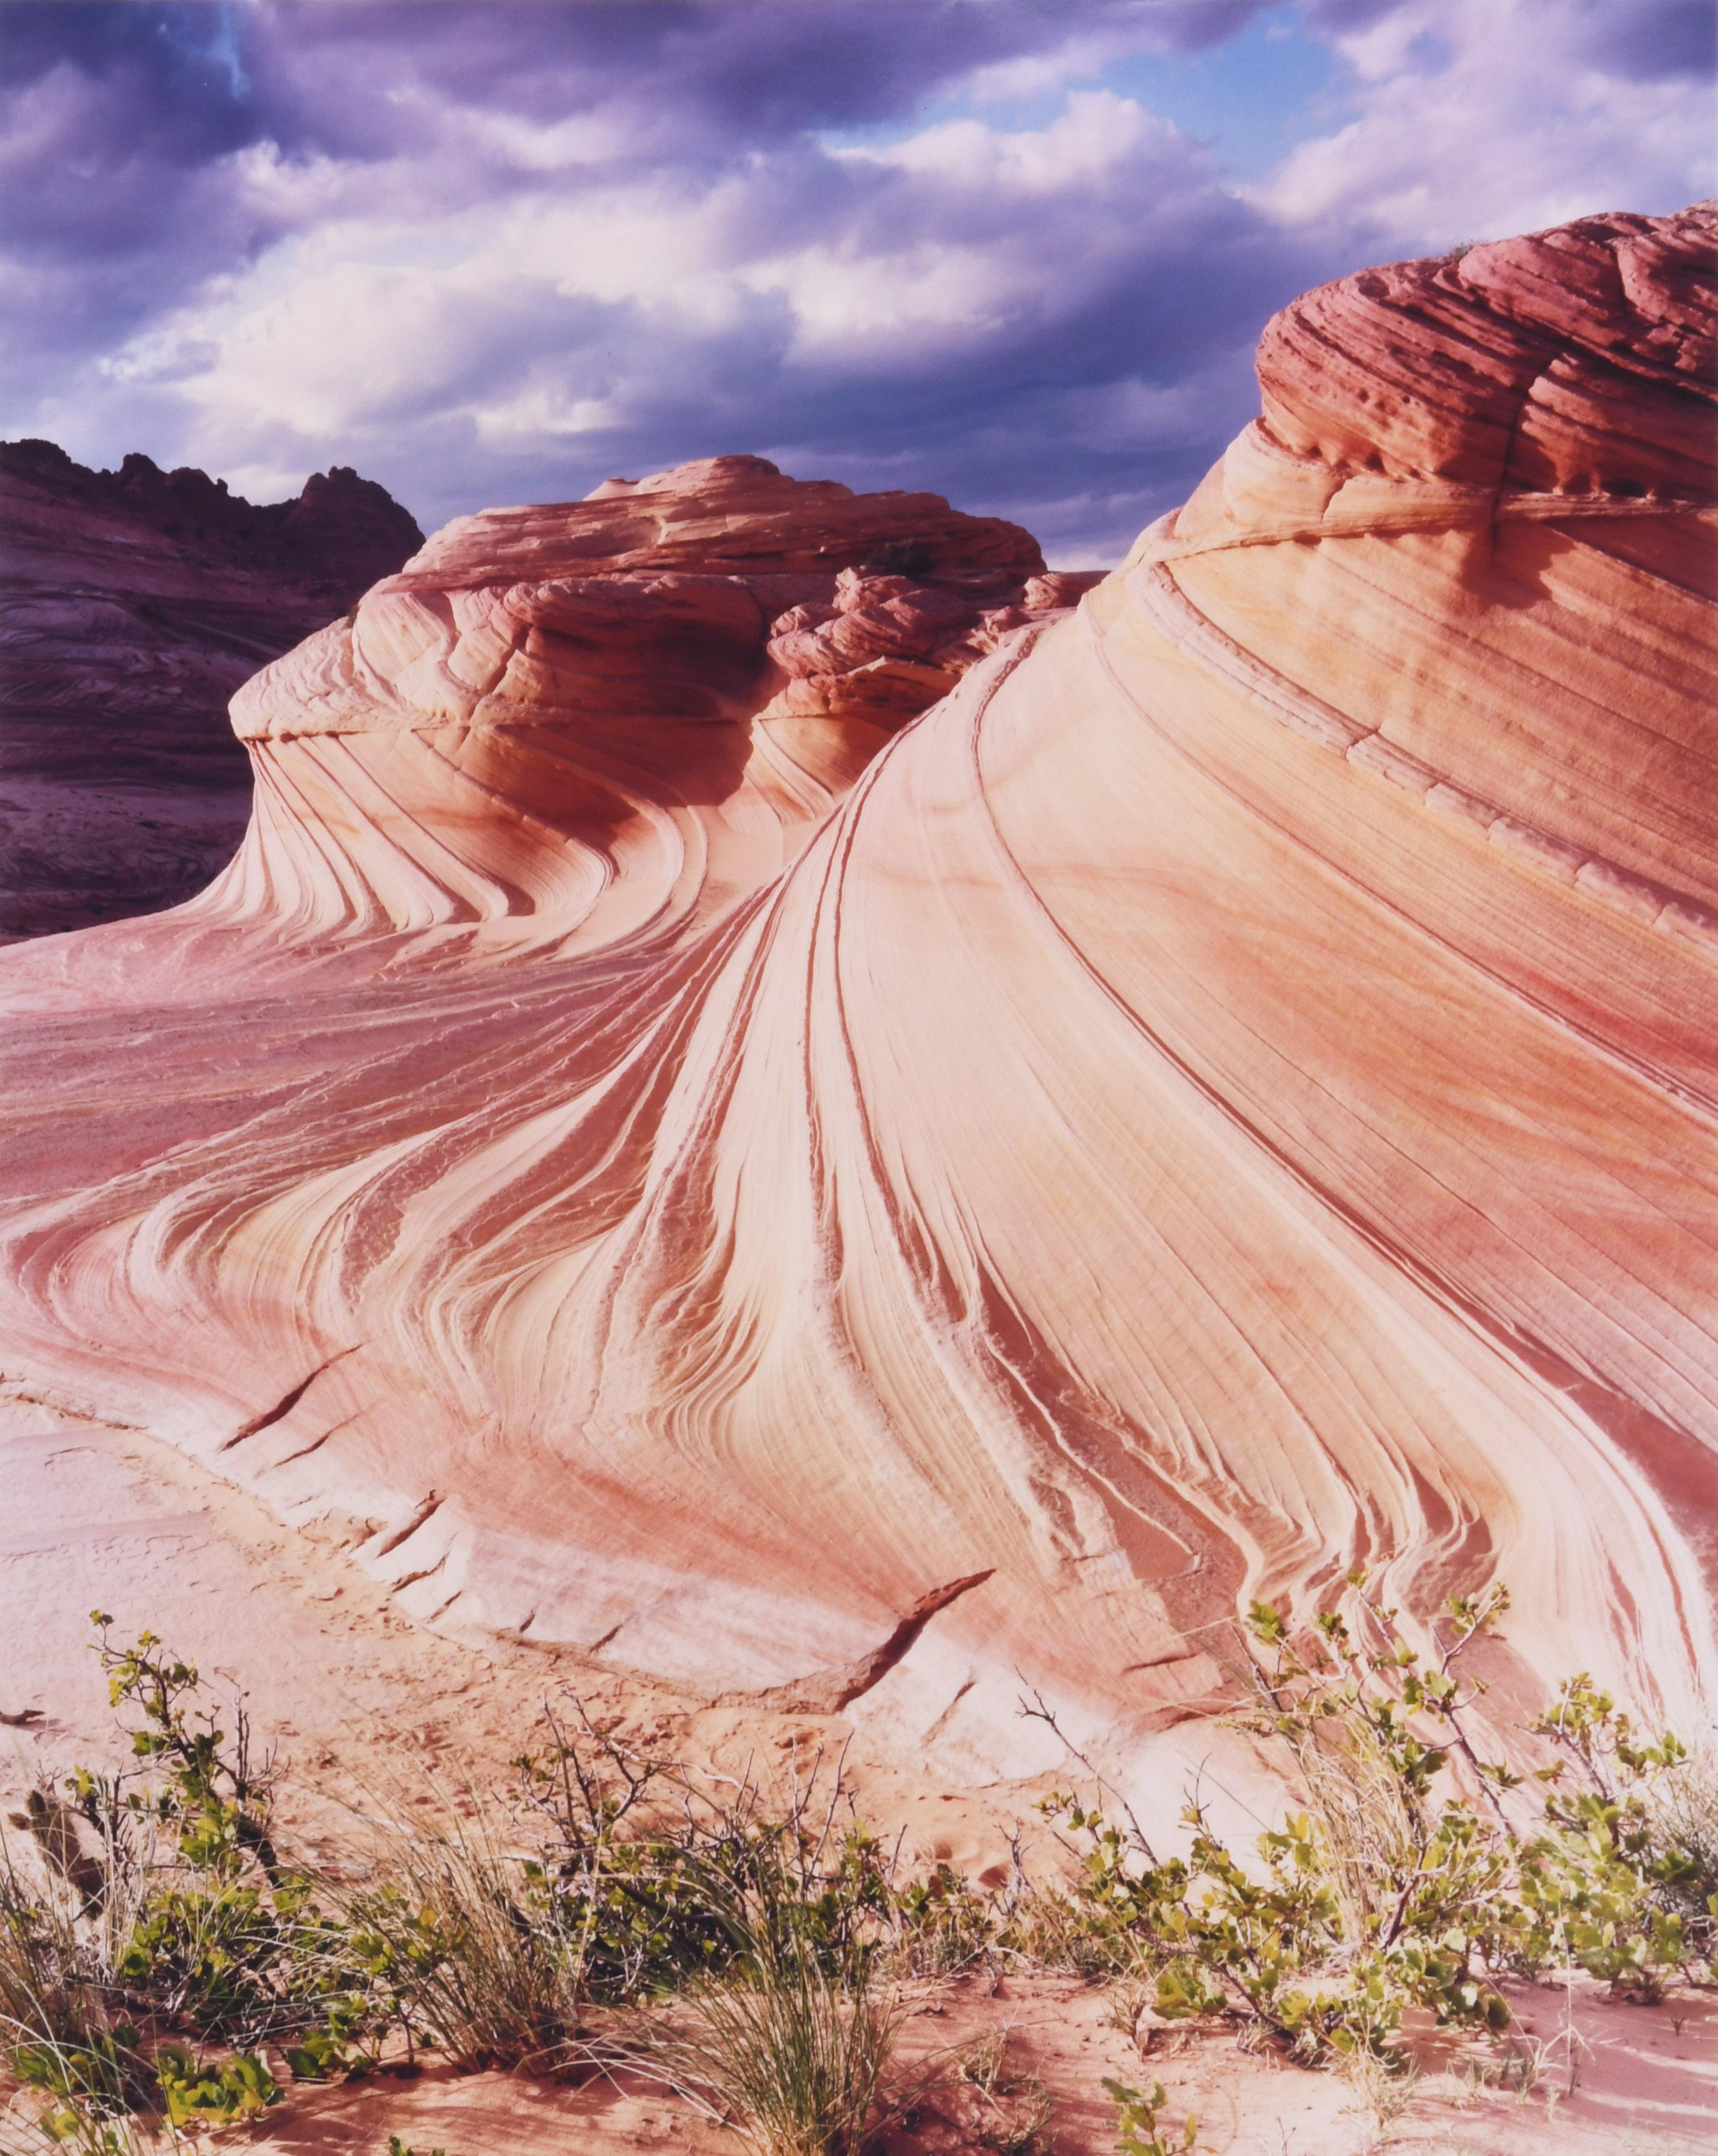 Unknown Landscape Photograph - The Second Wave, Coyote Buttes, Paria Canyon-Vermilion Clifts Wilderness, AR